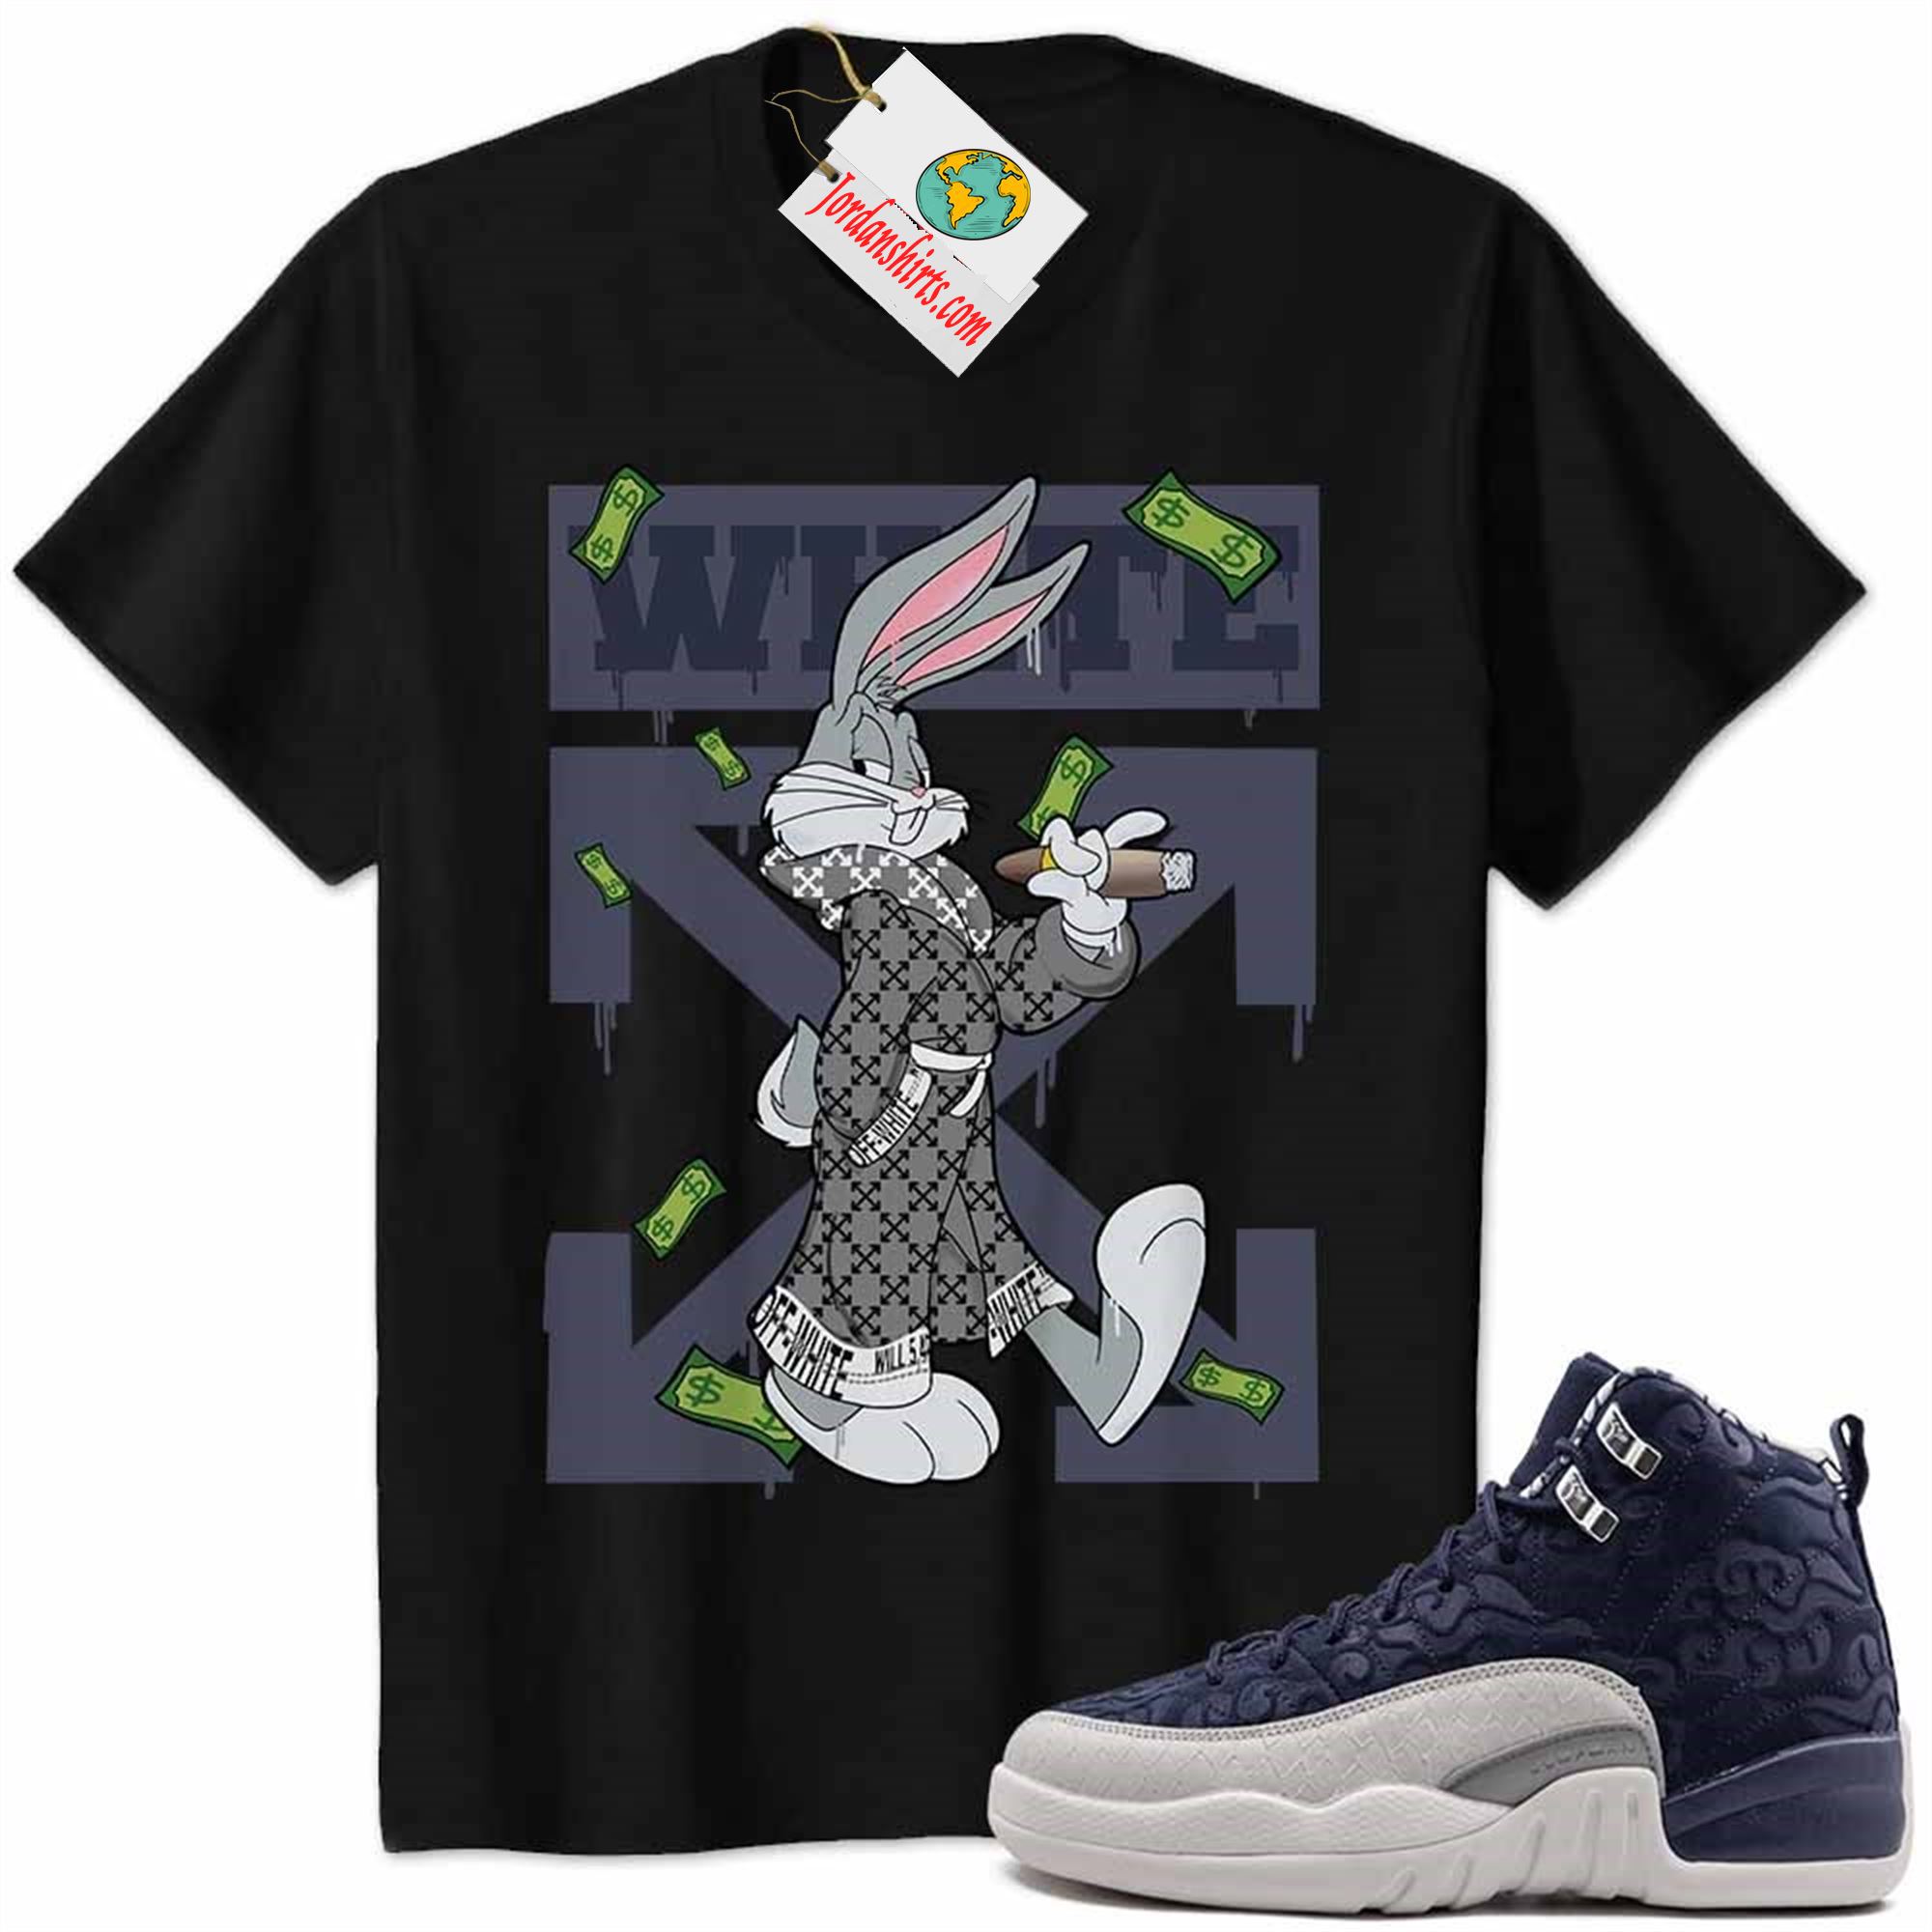 Jordan 12 Shirt, Jordan 12 International Flight Shirt Bug Bunny Smokes Weed Money Falling Black Plus Size Up To 5xl